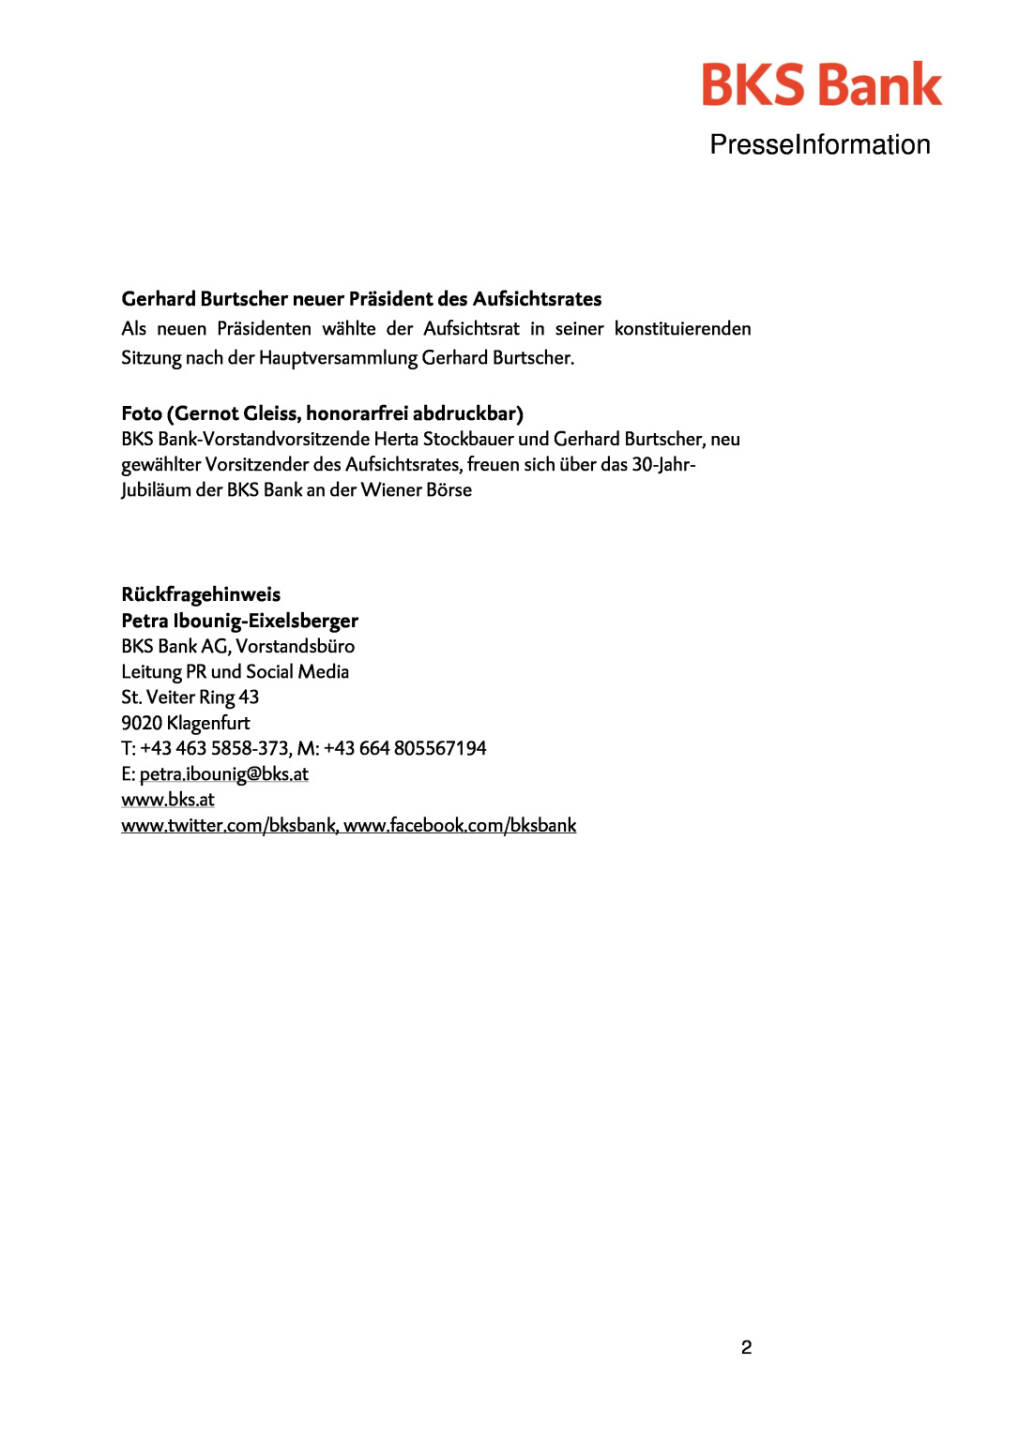 BKS Bank Hauptversammlung: Gerhard Burtscher neu im Aufsichtsrat, Seite 2/2, komplettes Dokument unter http://boerse-social.com/static/uploads/file_1089_bks_bank_hauptversammlung_gerhard_burtscher_neu_im_aufsichtsrat.pdf